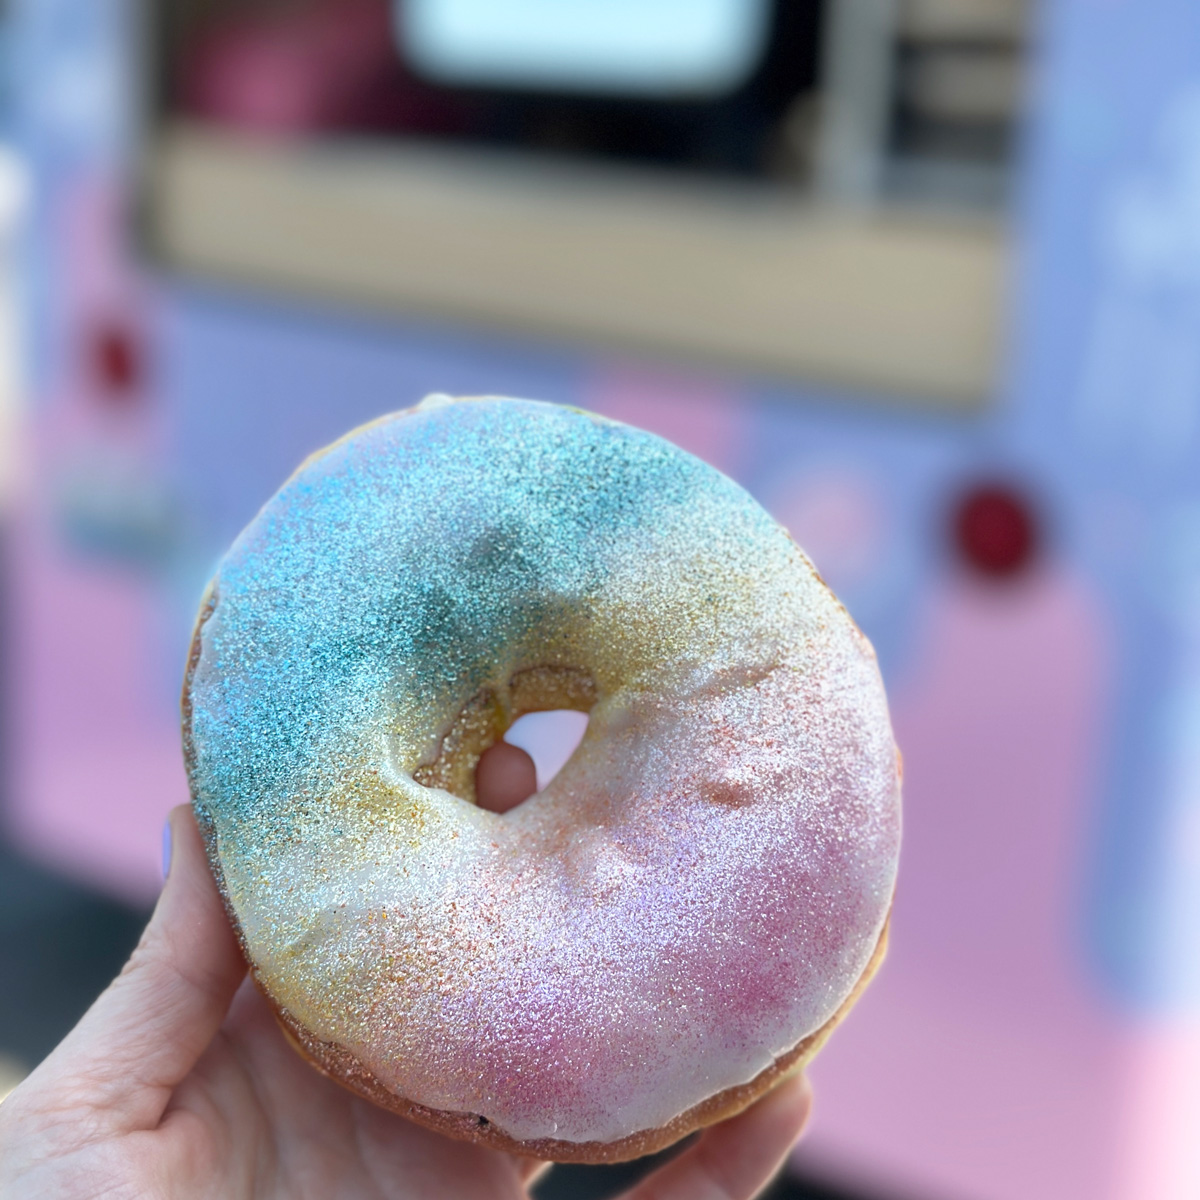 vegan rainbow glitter doughnut from Dough Joy